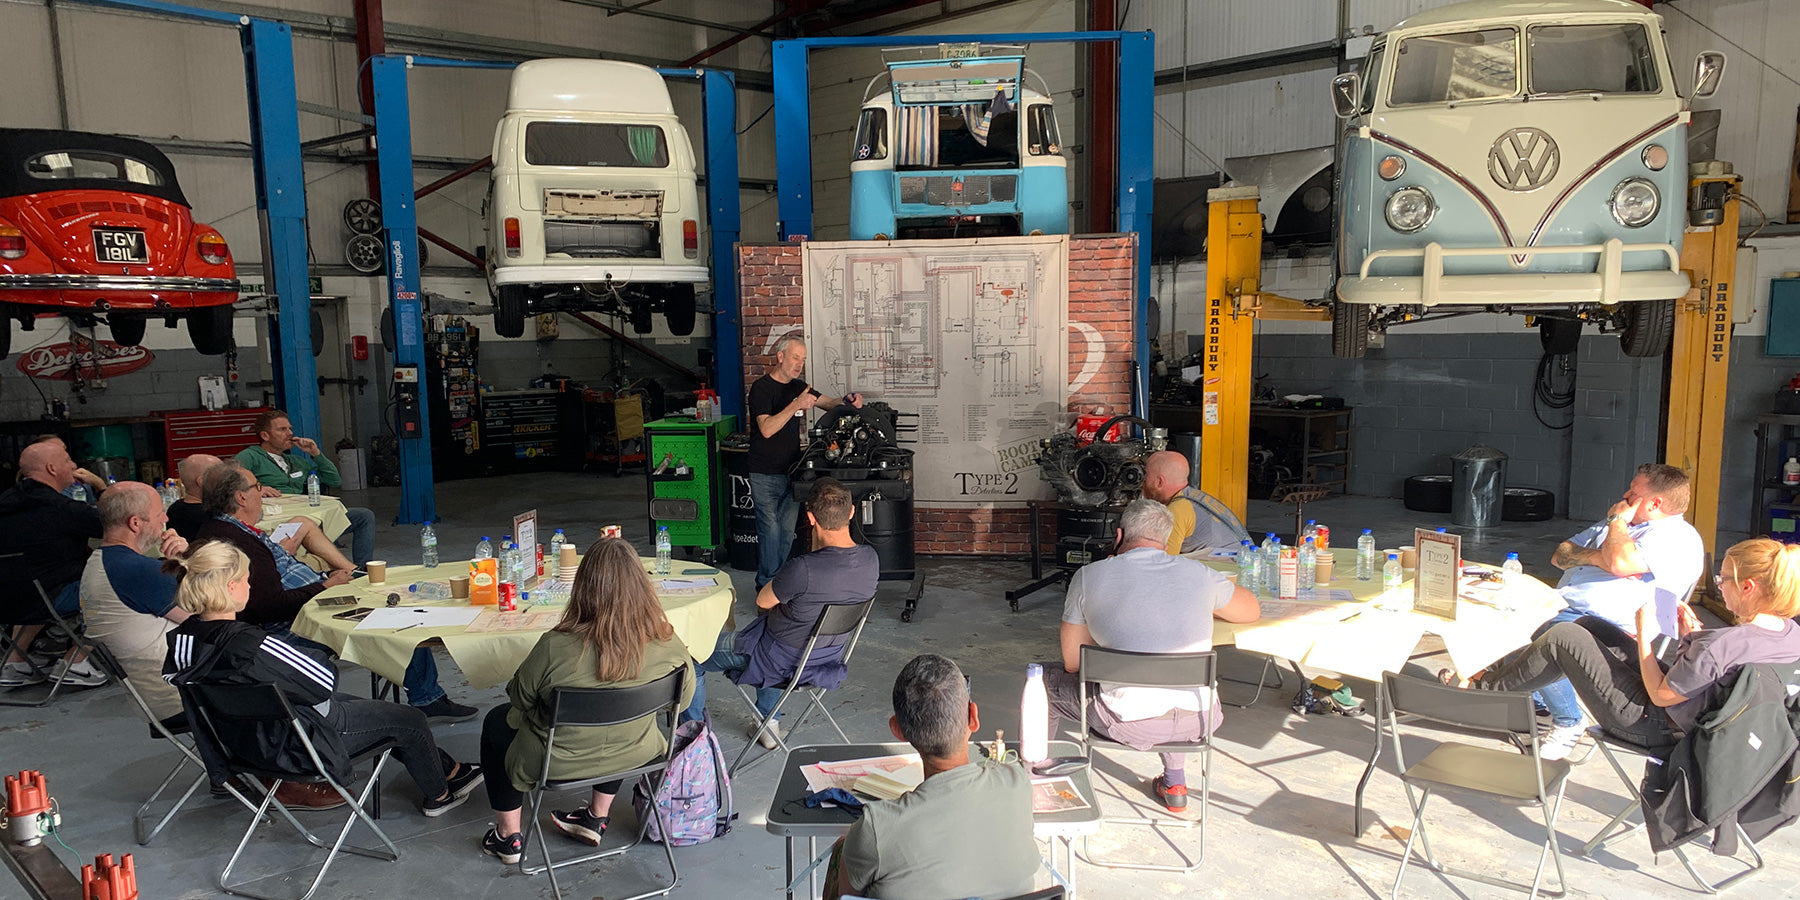 Boot camp VW maintenance training